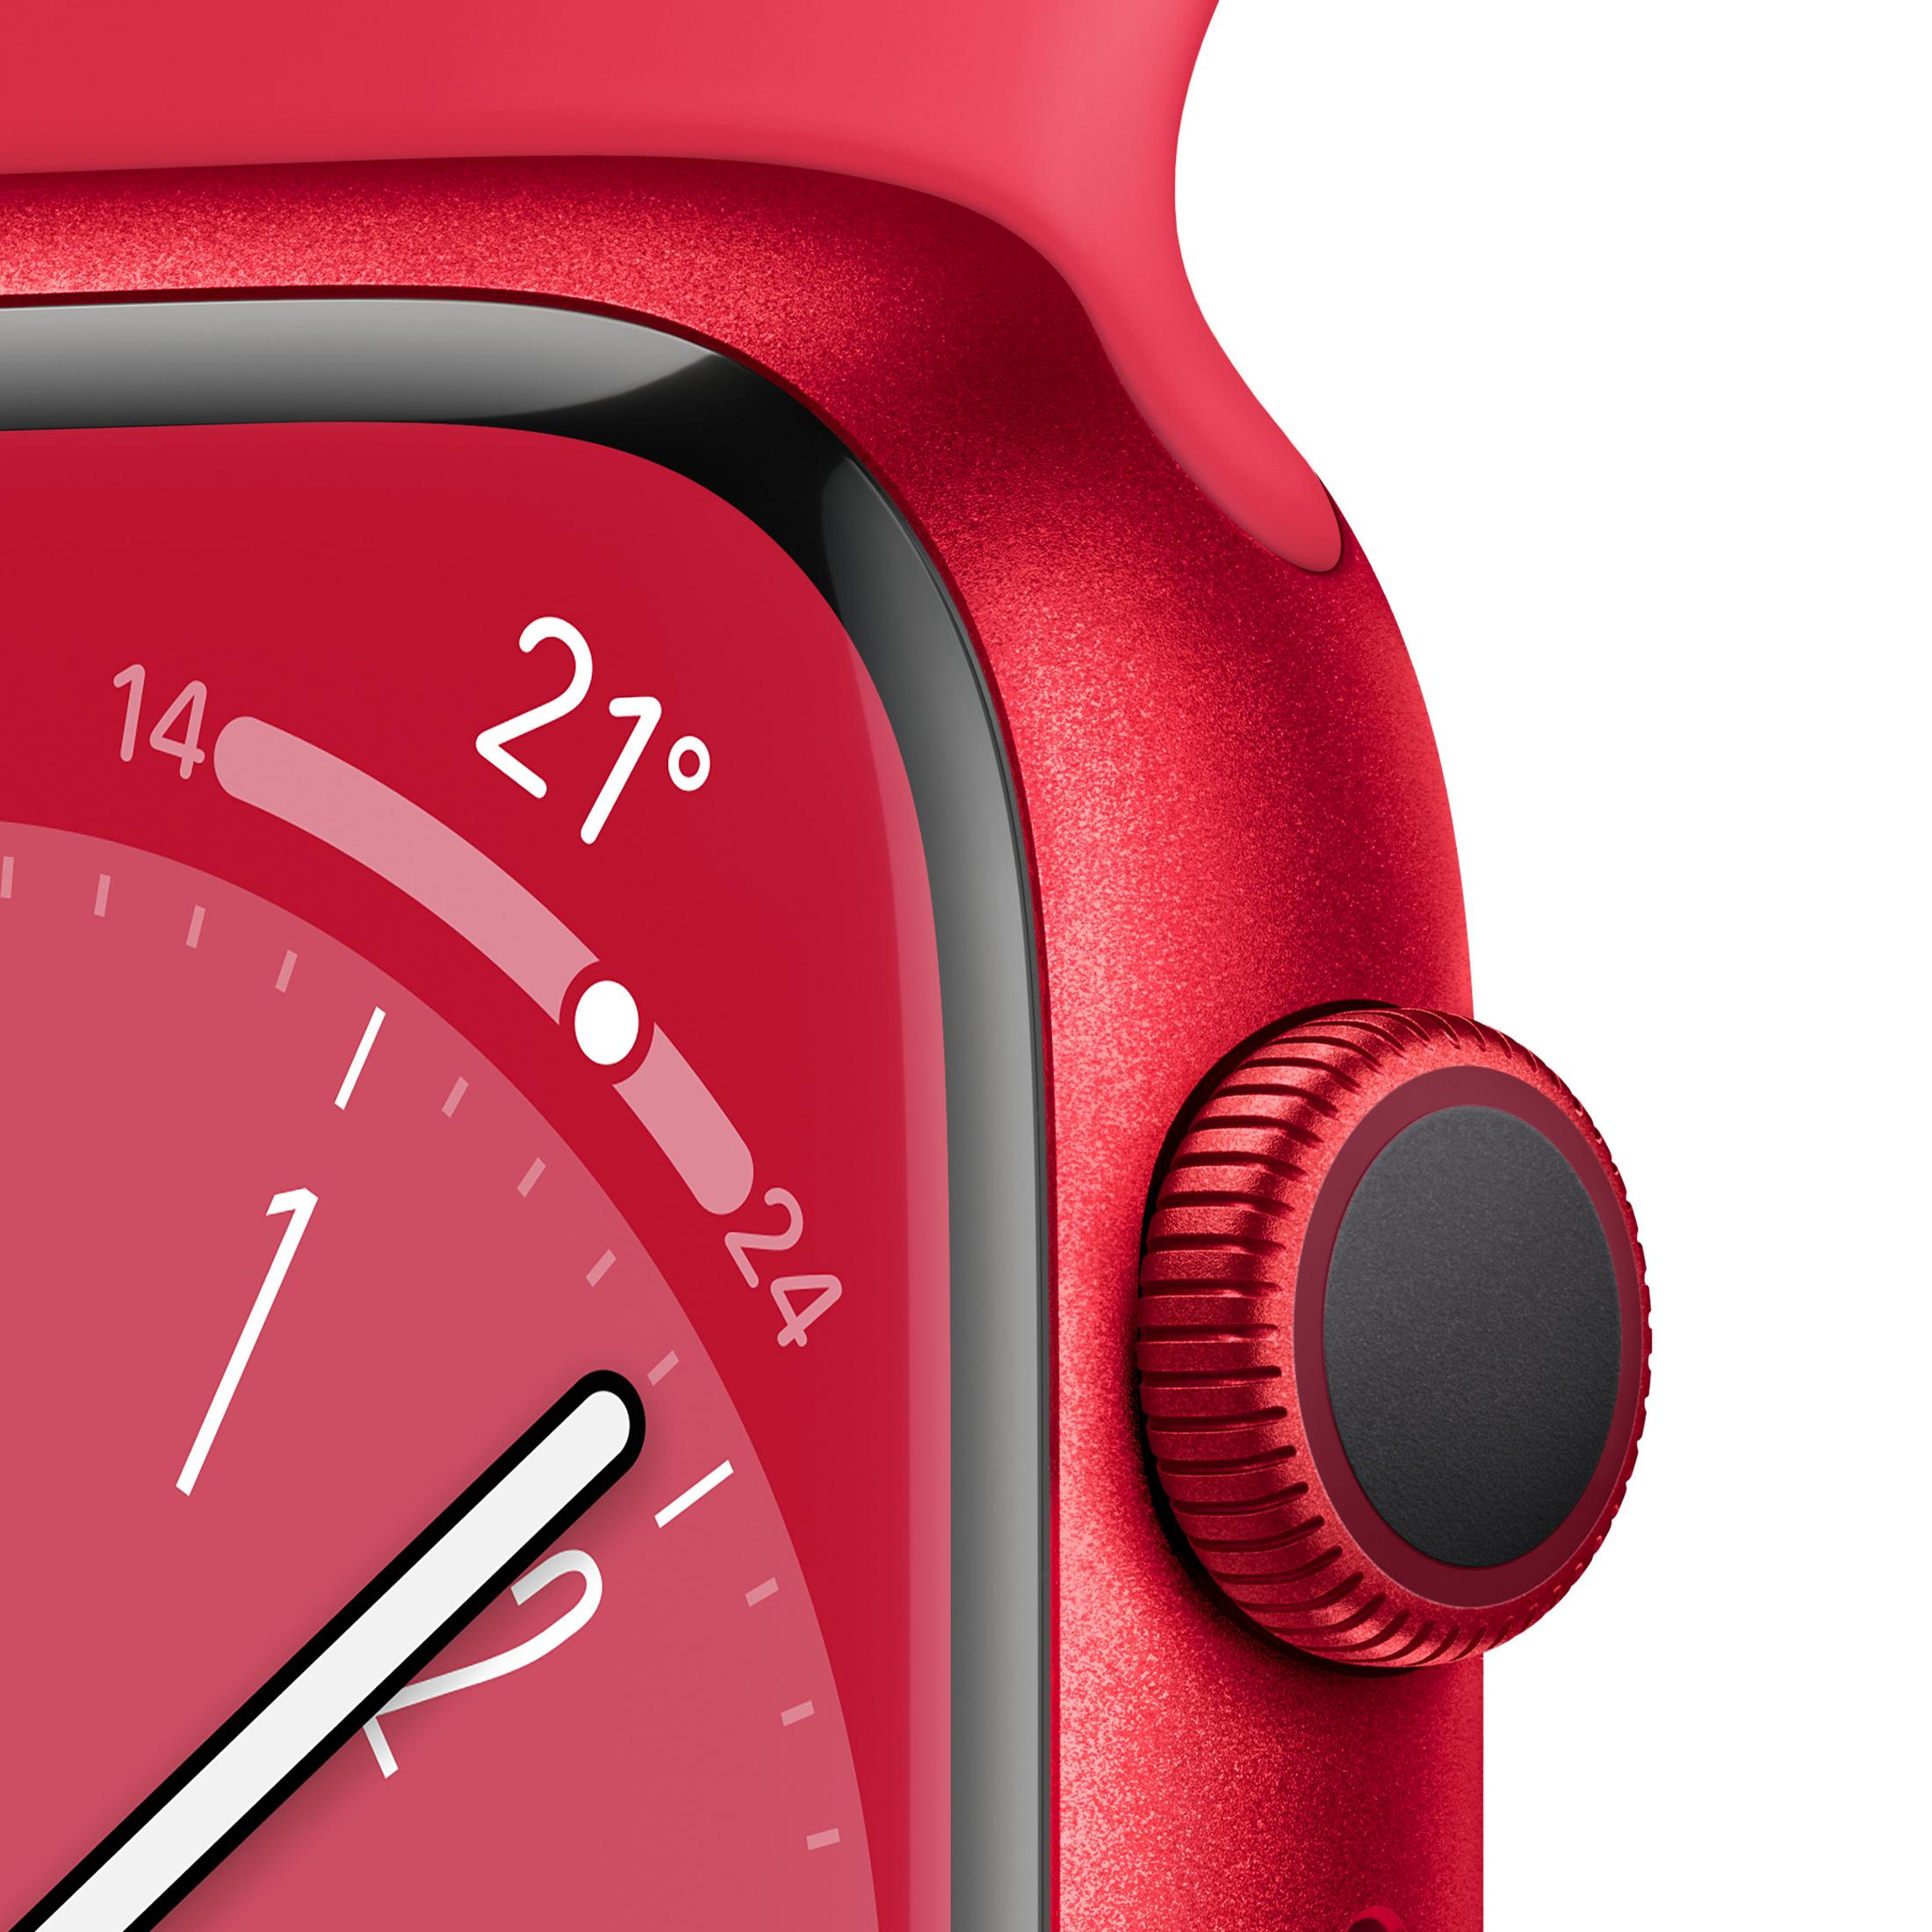 APPLE S8 GPS 41 RED Gehäuse: Smartwatch - (PRODUCT)RED, W ALU mm, 200 REG Armband: Aluminium Fluorelastomer, SPORT RED (PRODUCT)RED 130